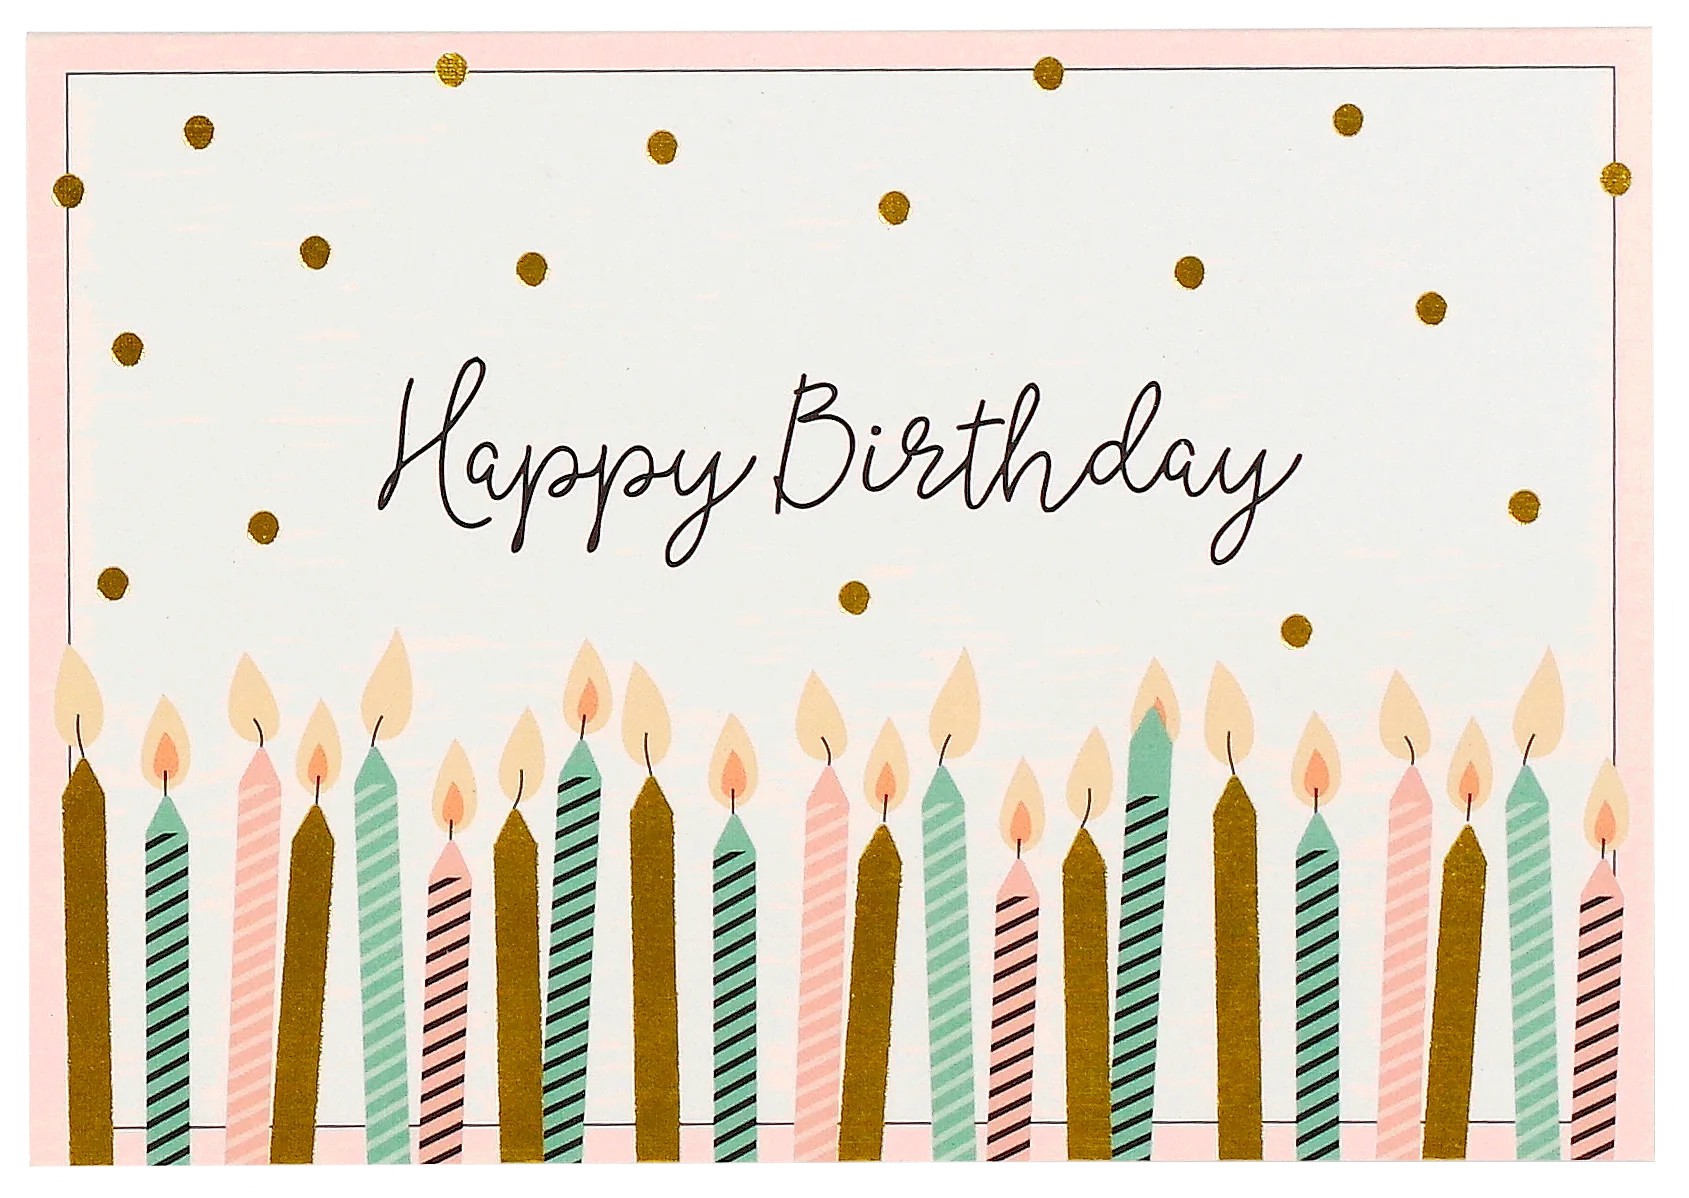 Happy Birthday Note Cards - The Silver Dahlia